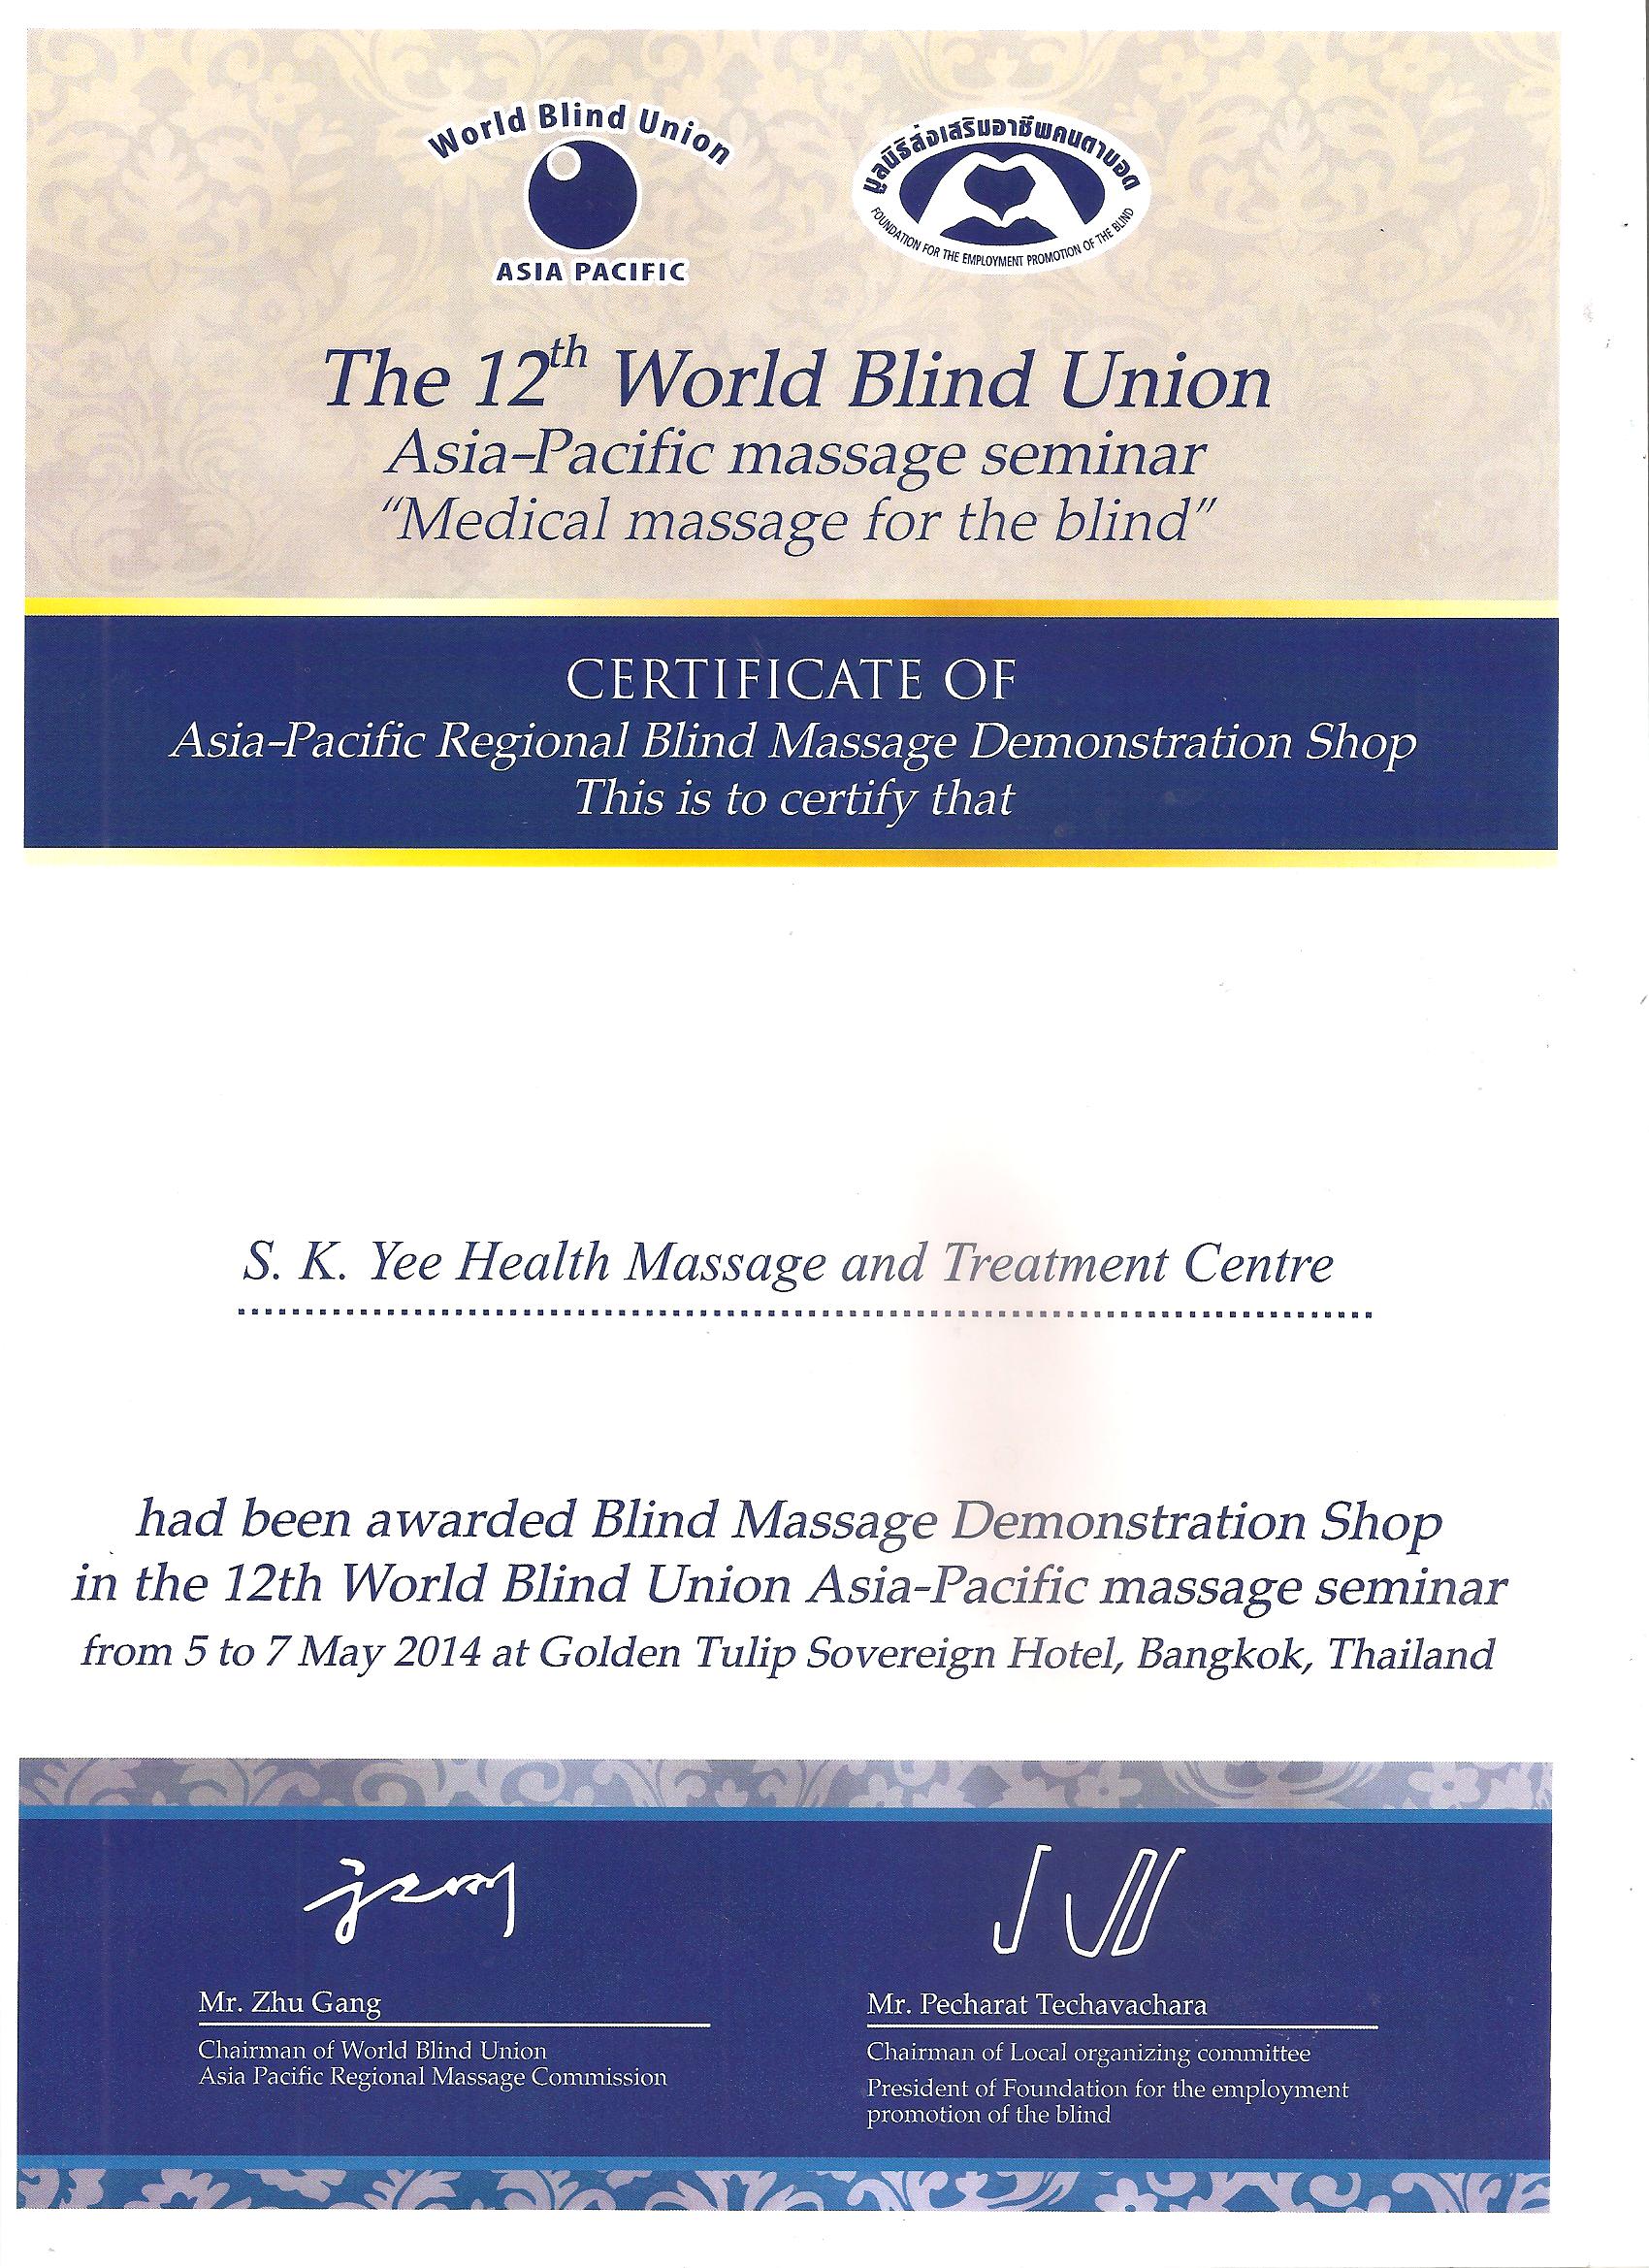 Asia-Pacific Regional Blind Massage Demonstration Shop